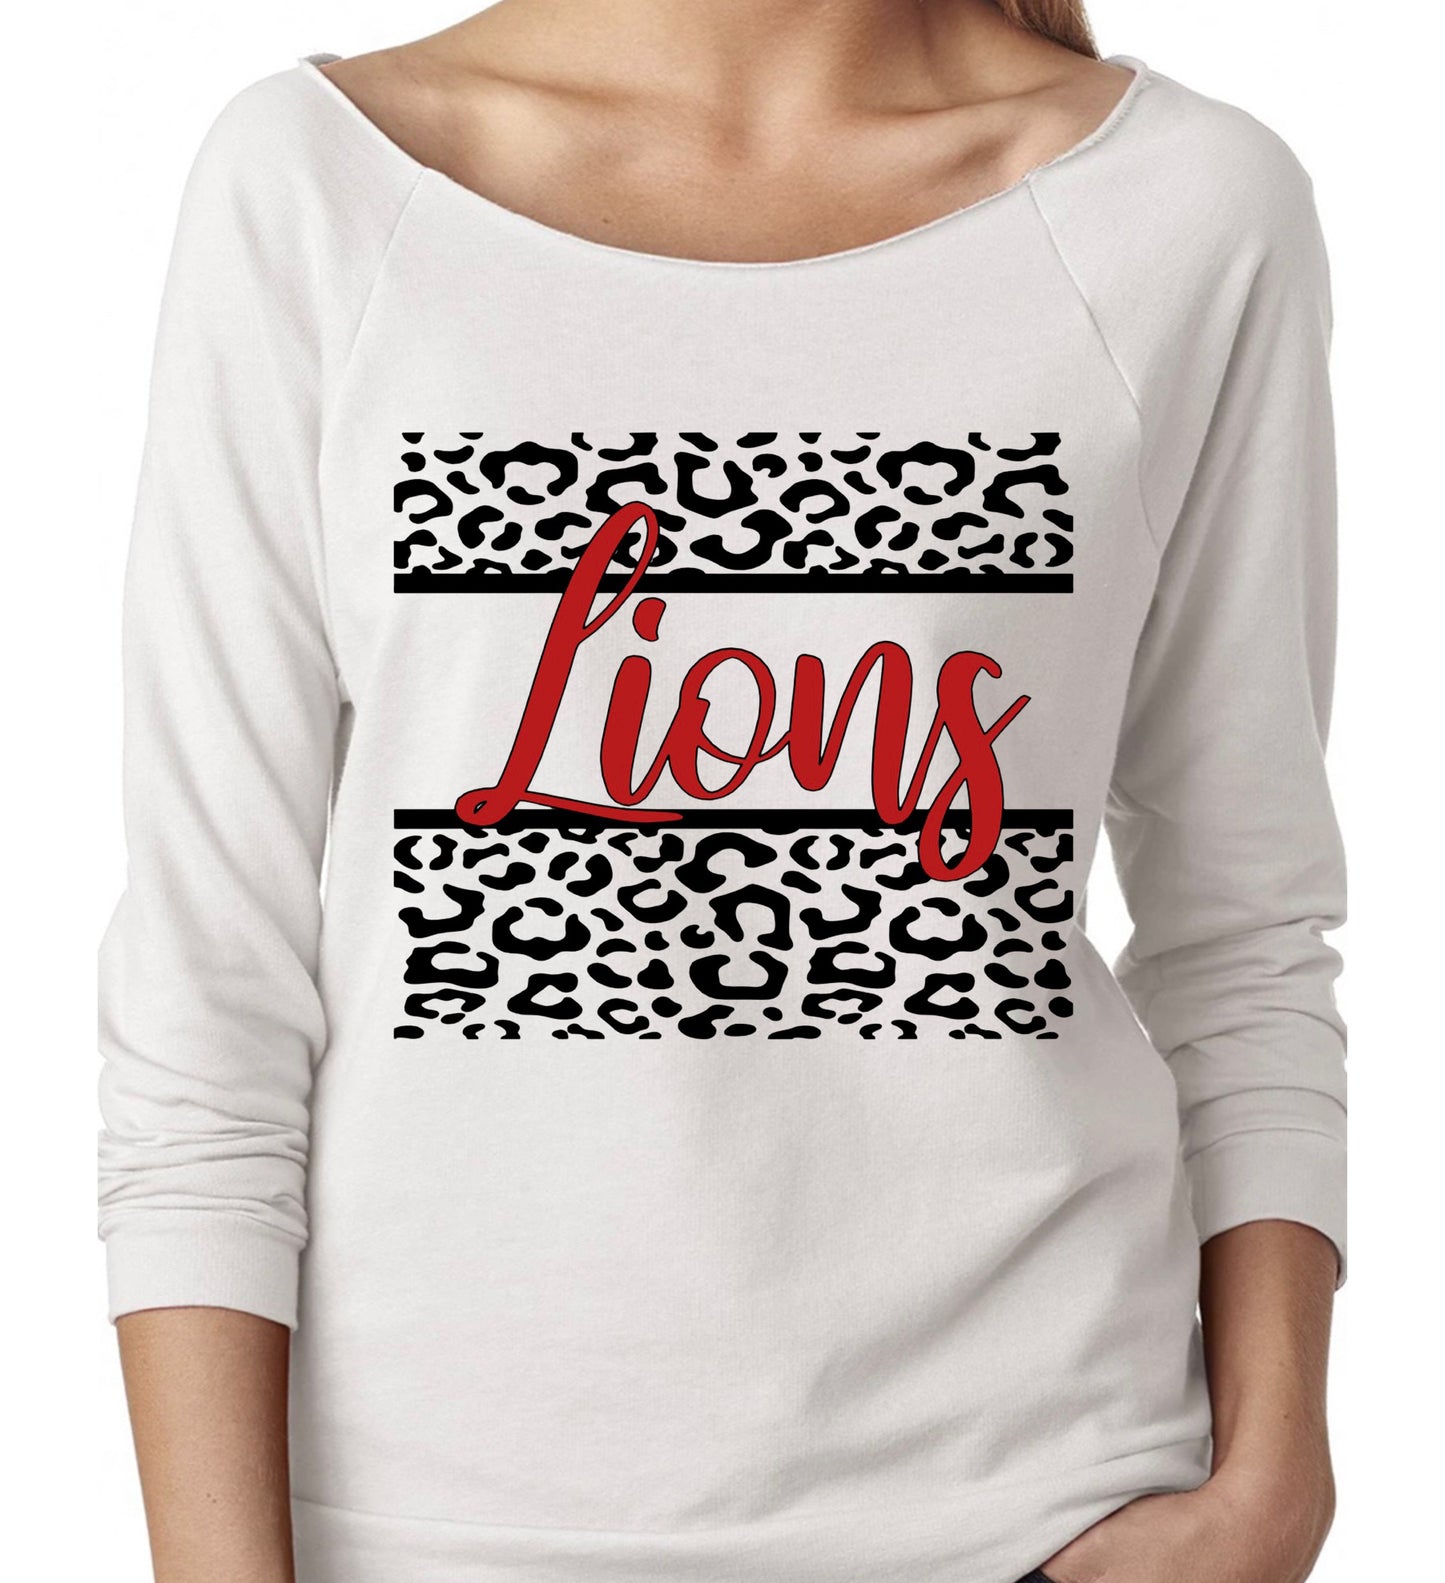 Adult Liberty Union Lions Leopard Lions Off-Shoulder Lightweight Top